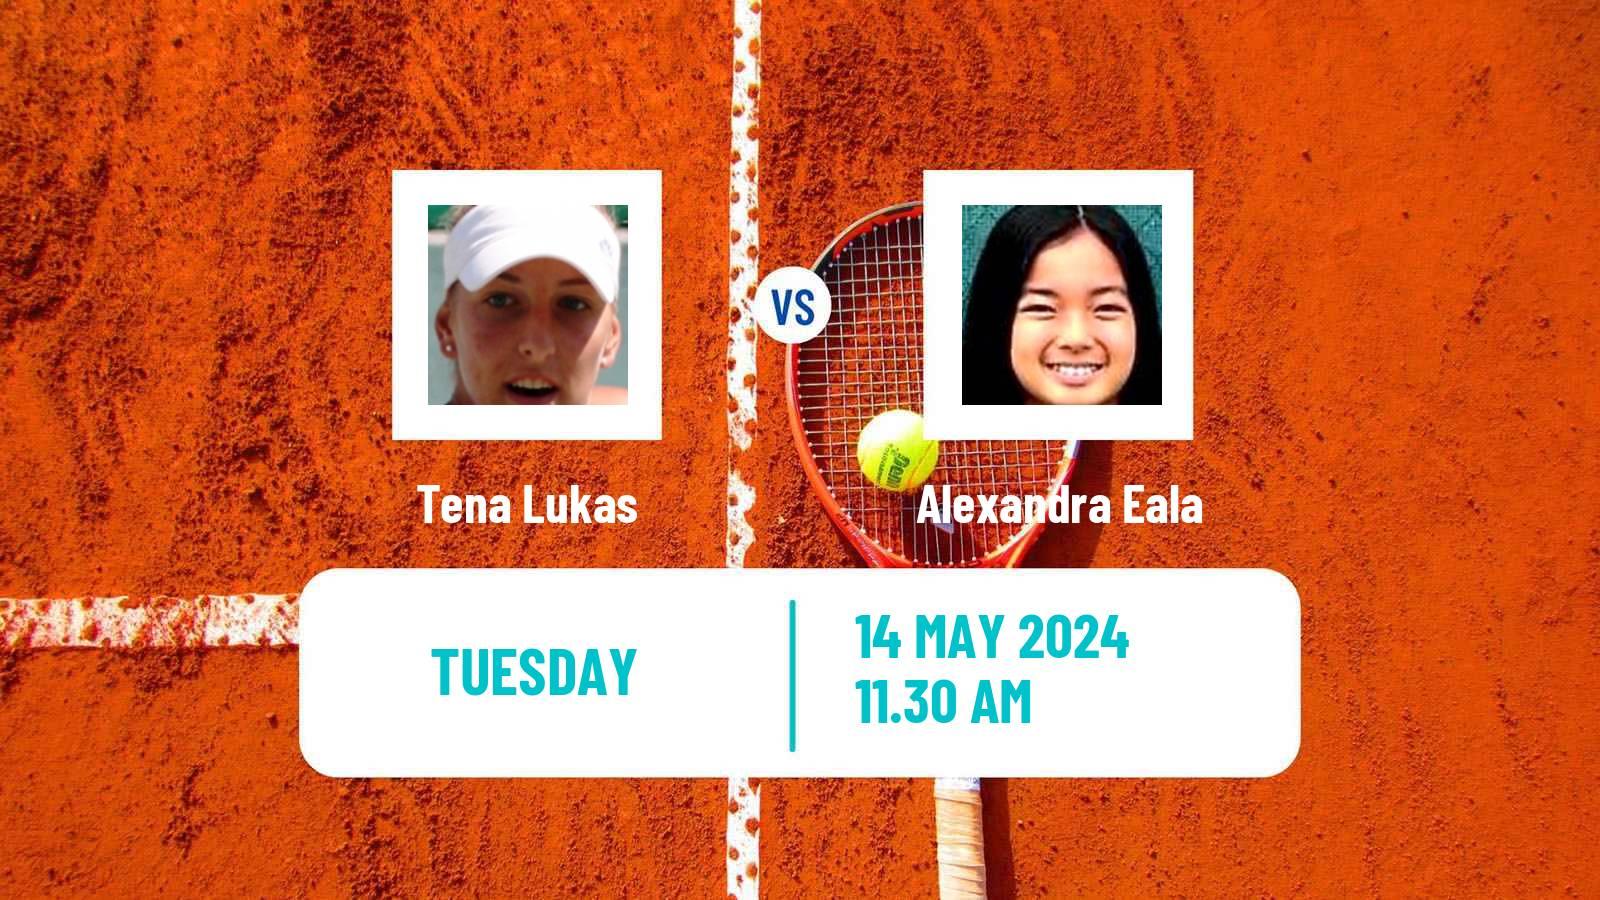 Tennis ITF W75 Zagreb Women 2024 Tena Lukas - Alexandra Eala